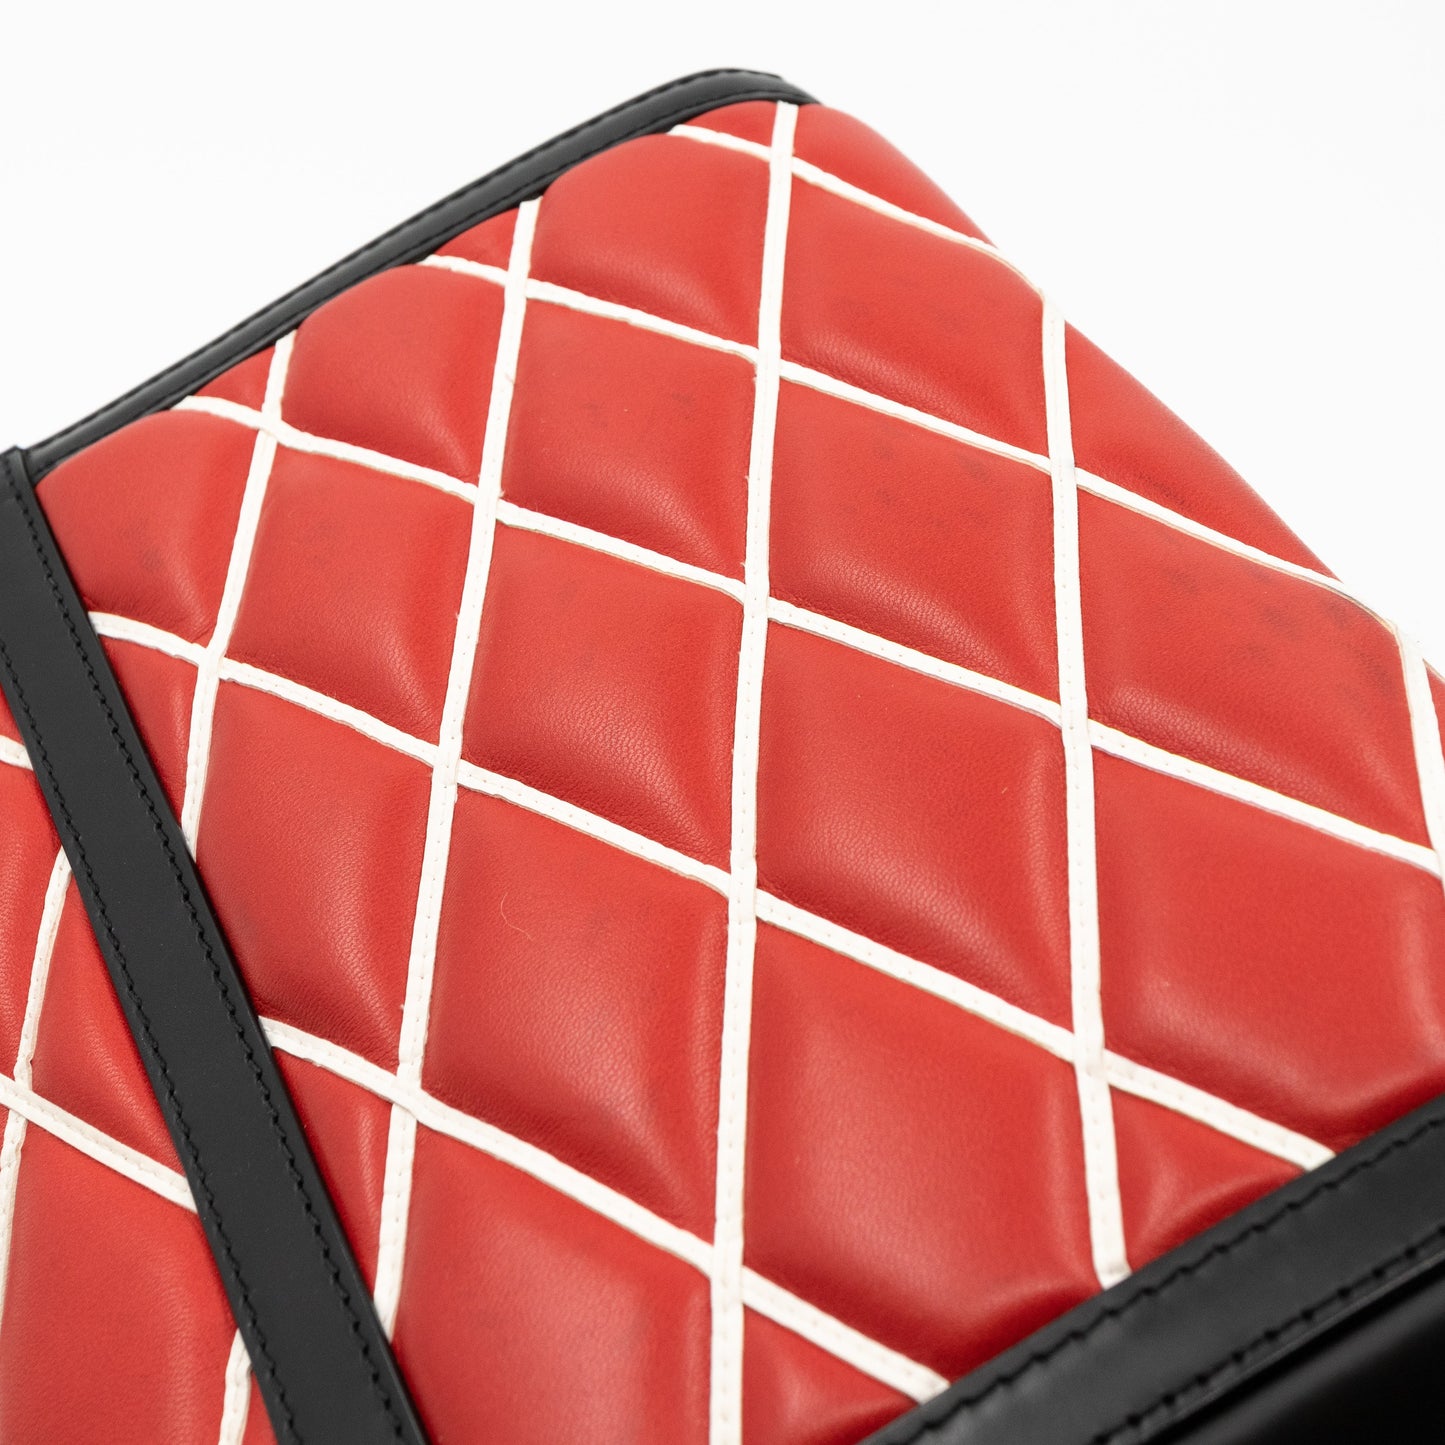 Malletage Pochette Flap Bag Red Leather